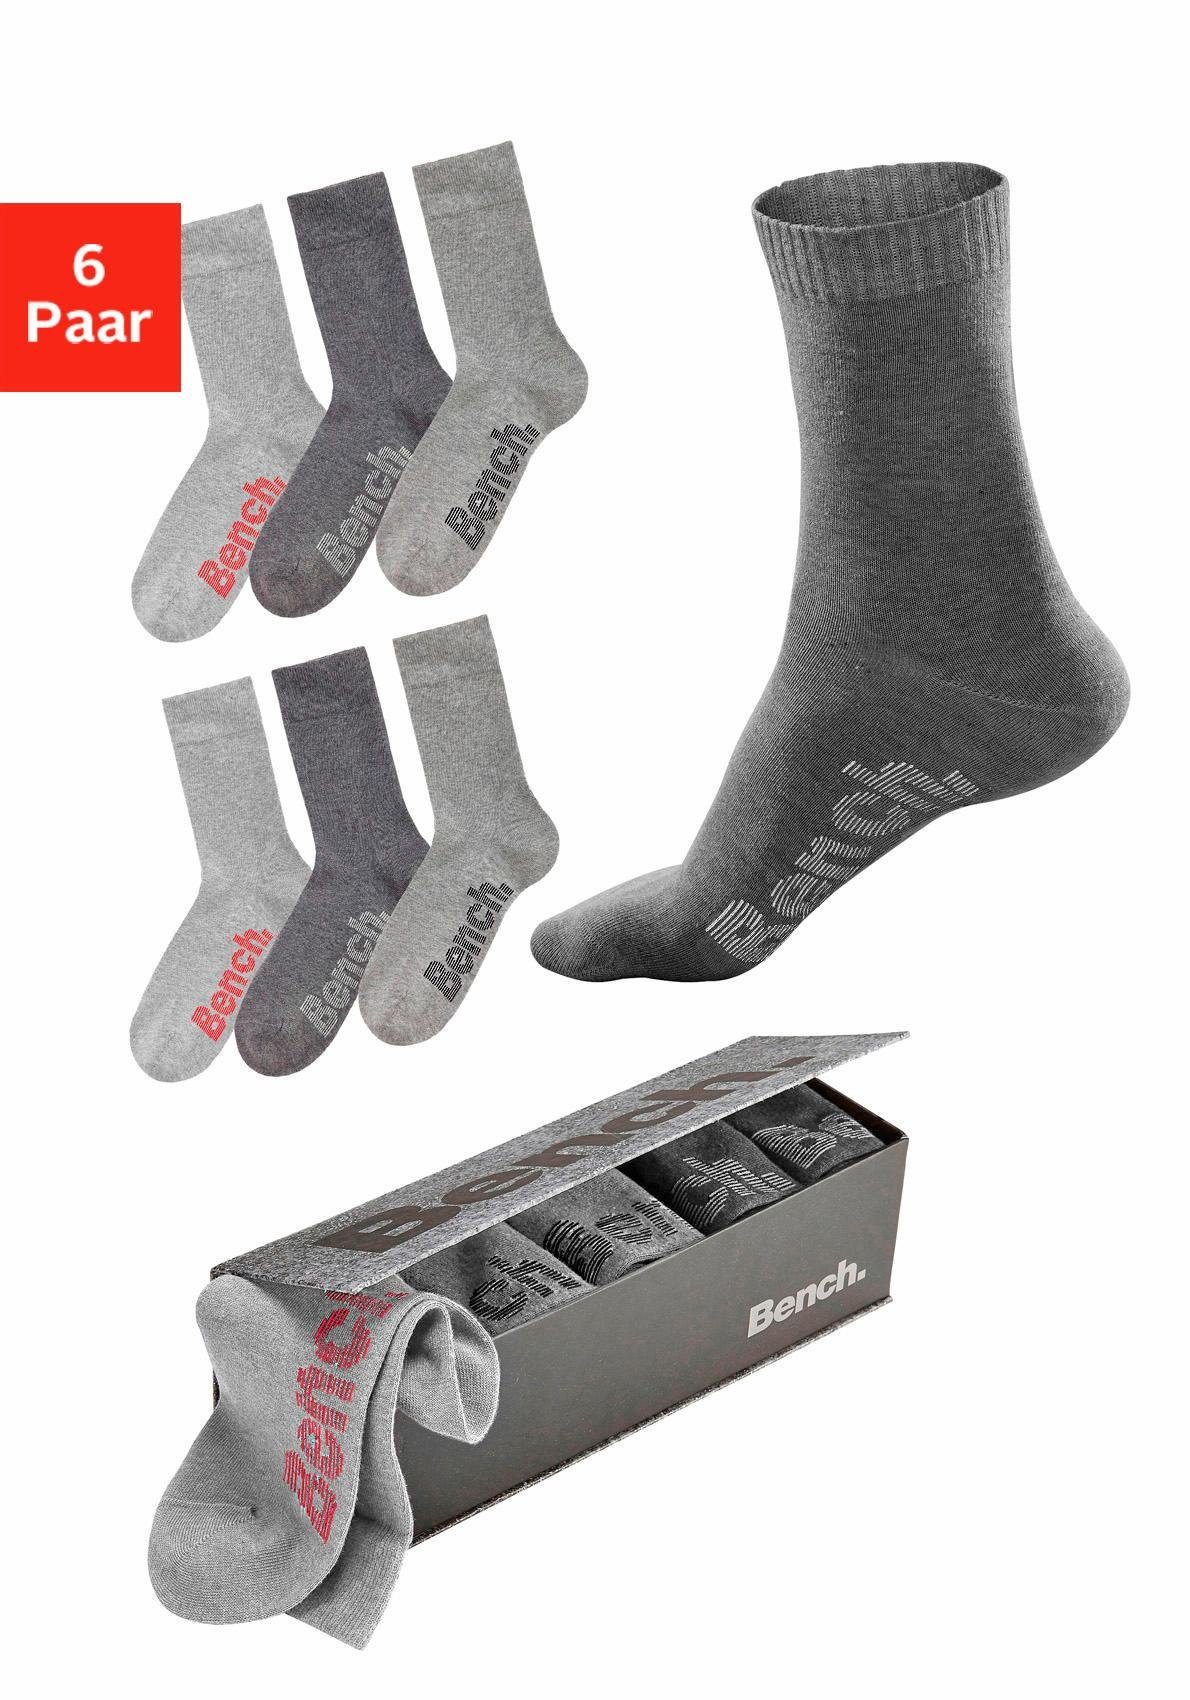 Bench. Socken (Set, 6-Paar) mit verschiedenfarbigen Logos grau-meliert | Wintersocken